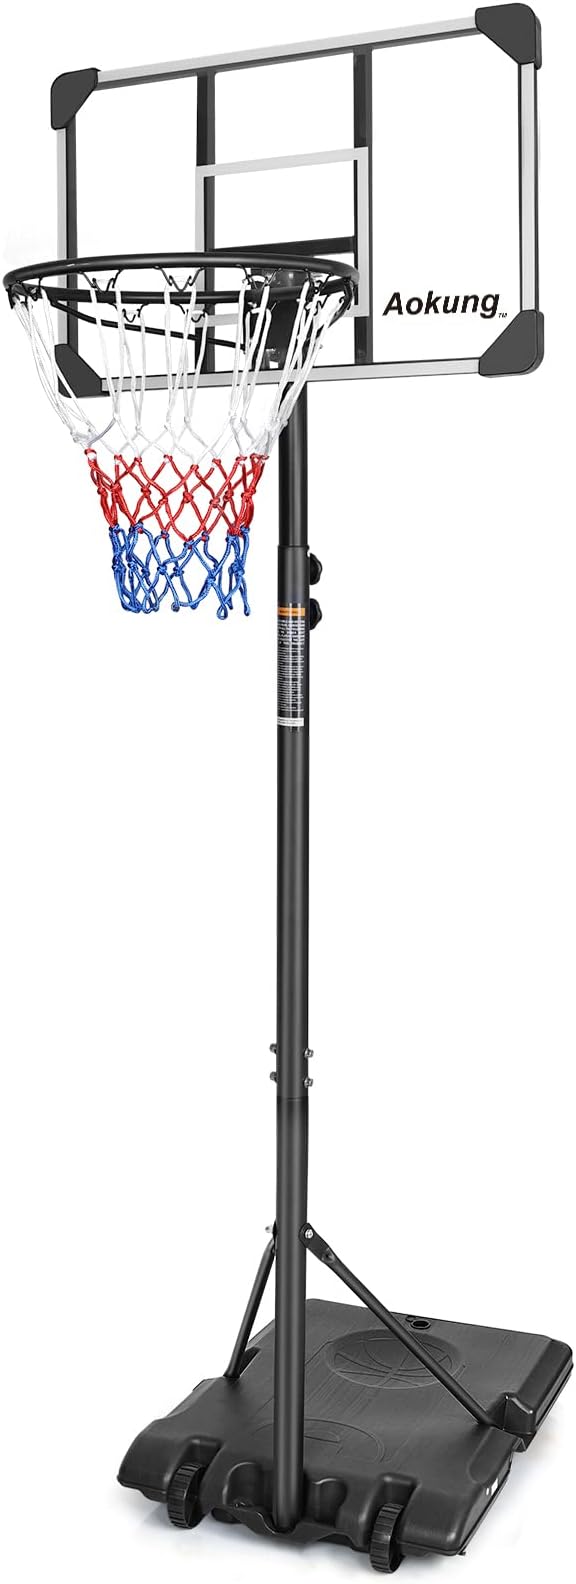 aokung teenagers youth height adjustable 5 6 to 7ft basketball hoop 28 inch backboard portable basketball